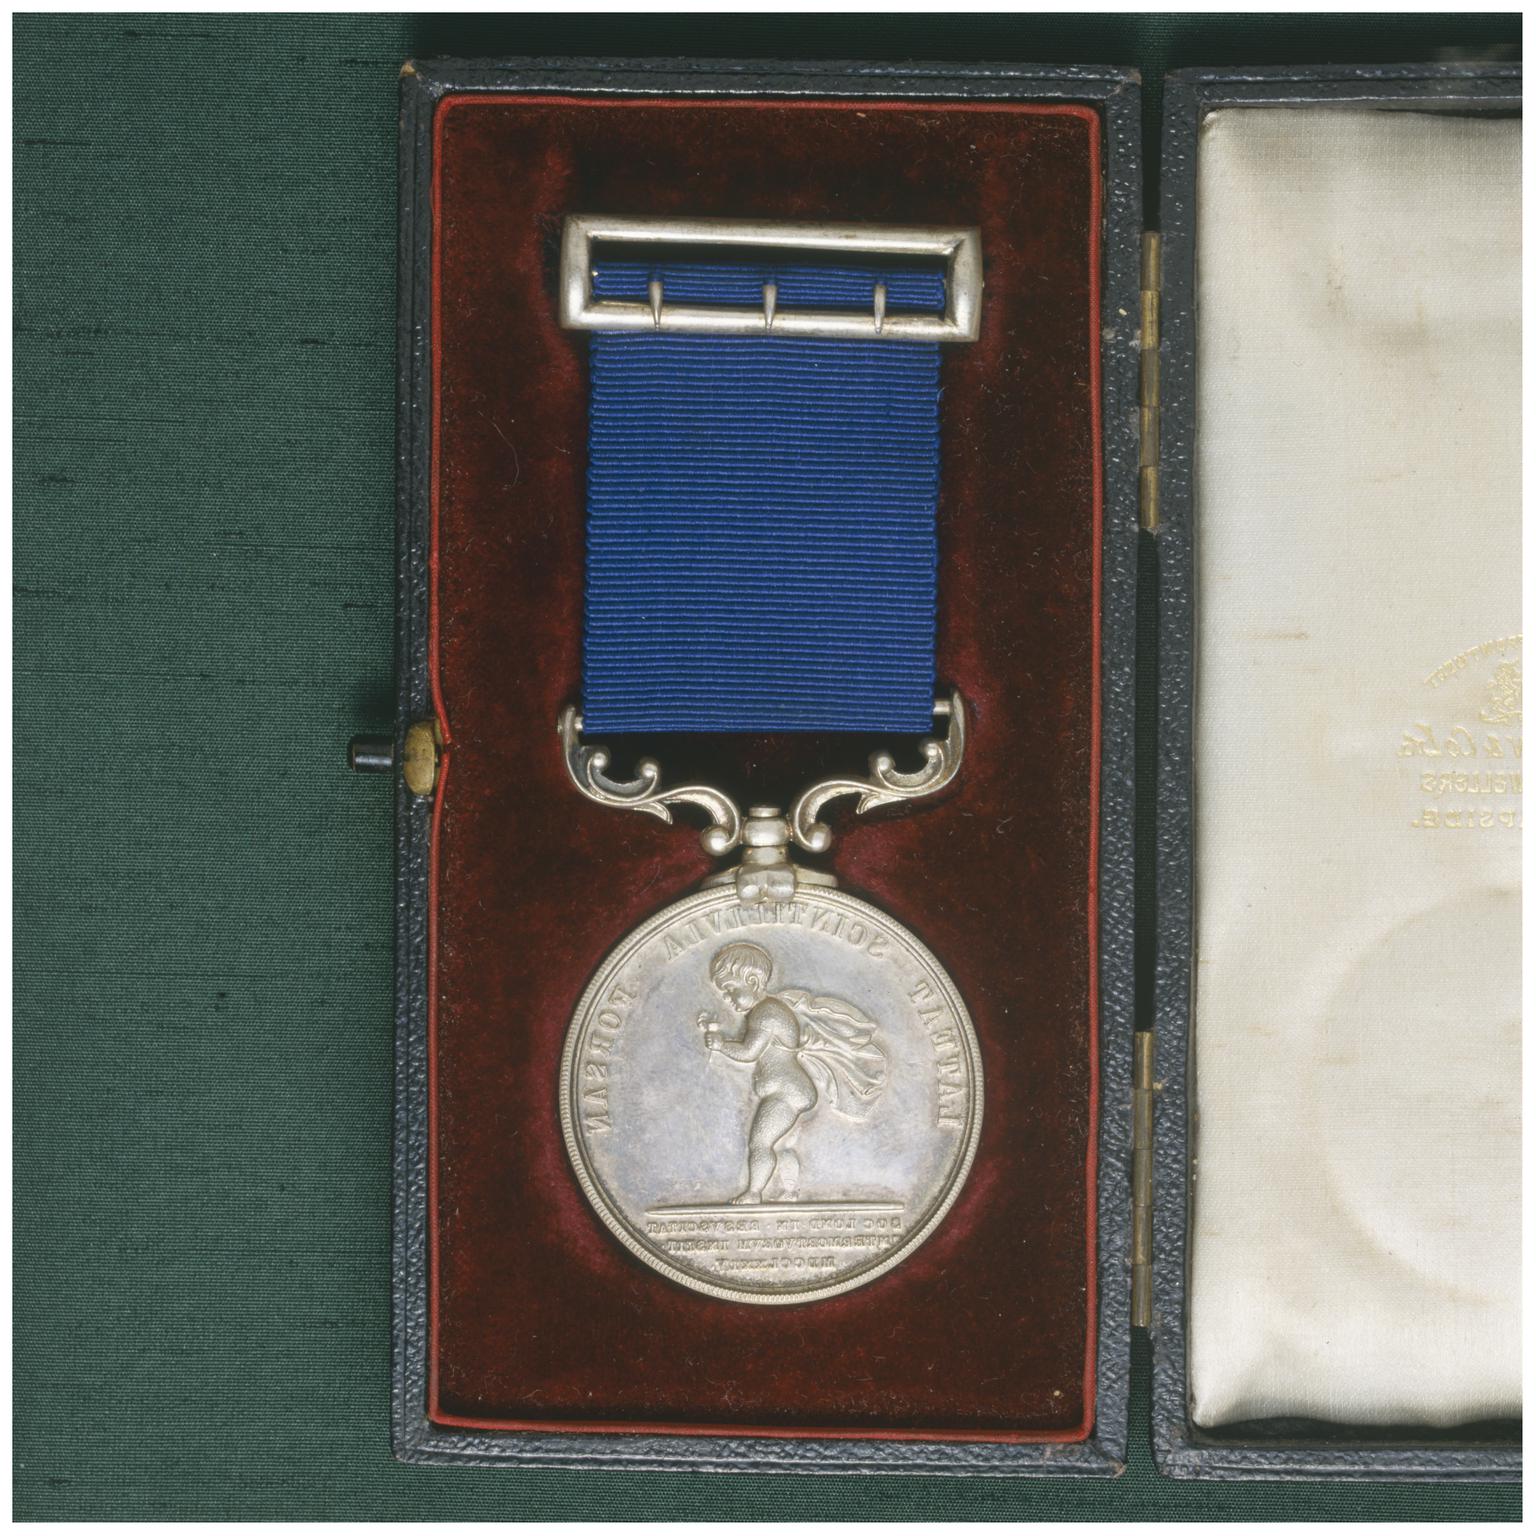 Royal Humane Soc. medal presented to R. Williams